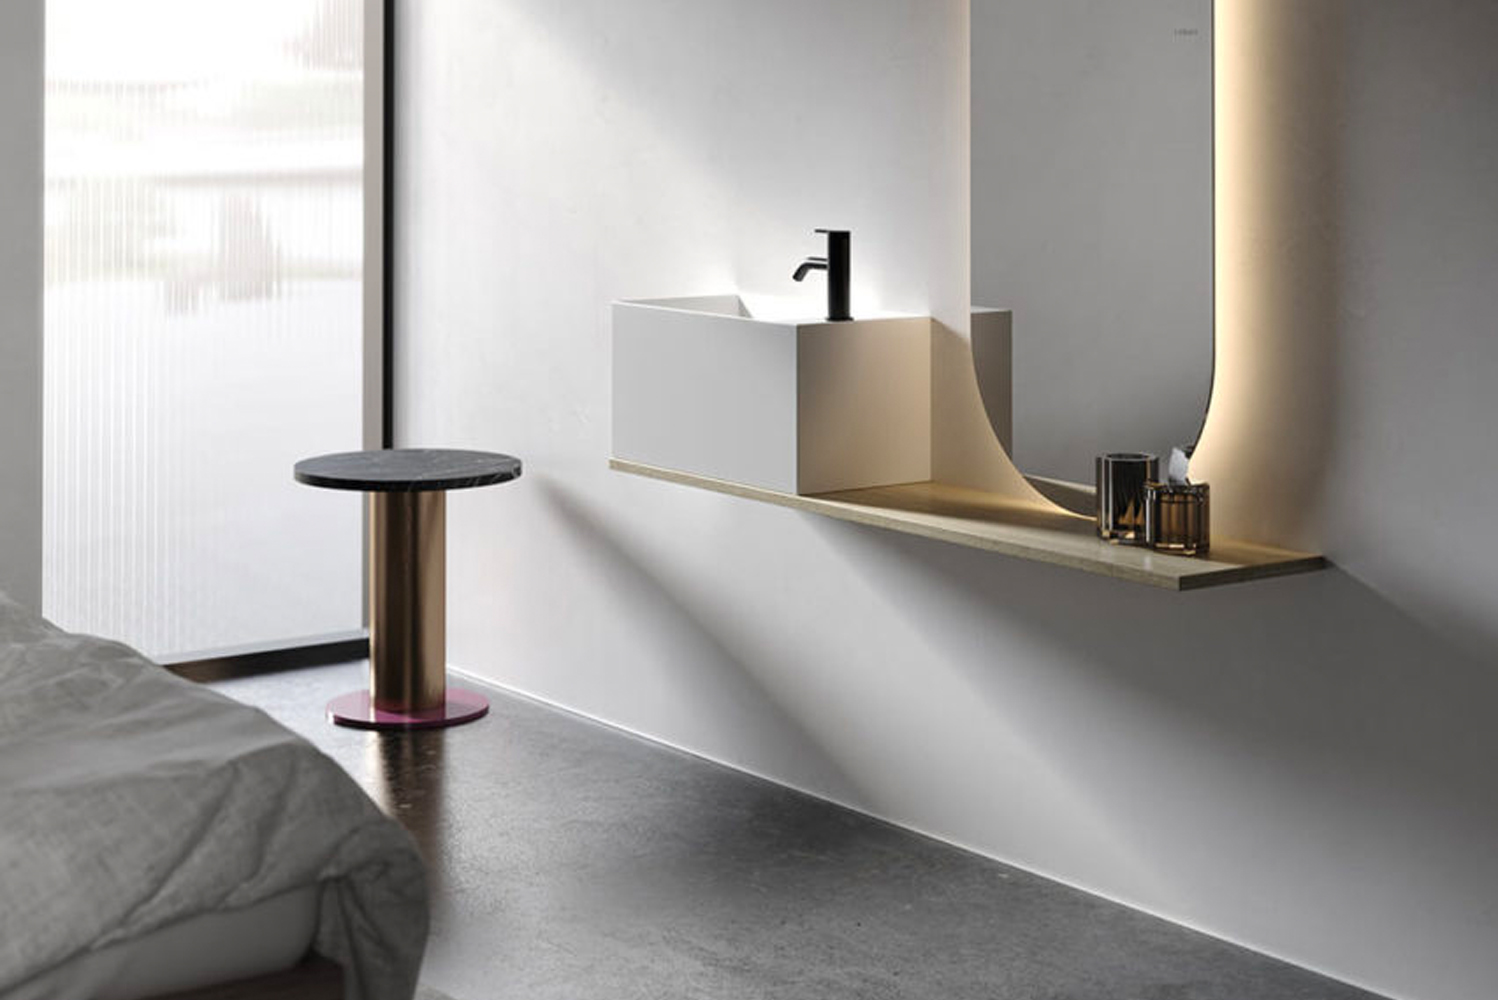 Inbani announced Facett a washbasin for small spaces